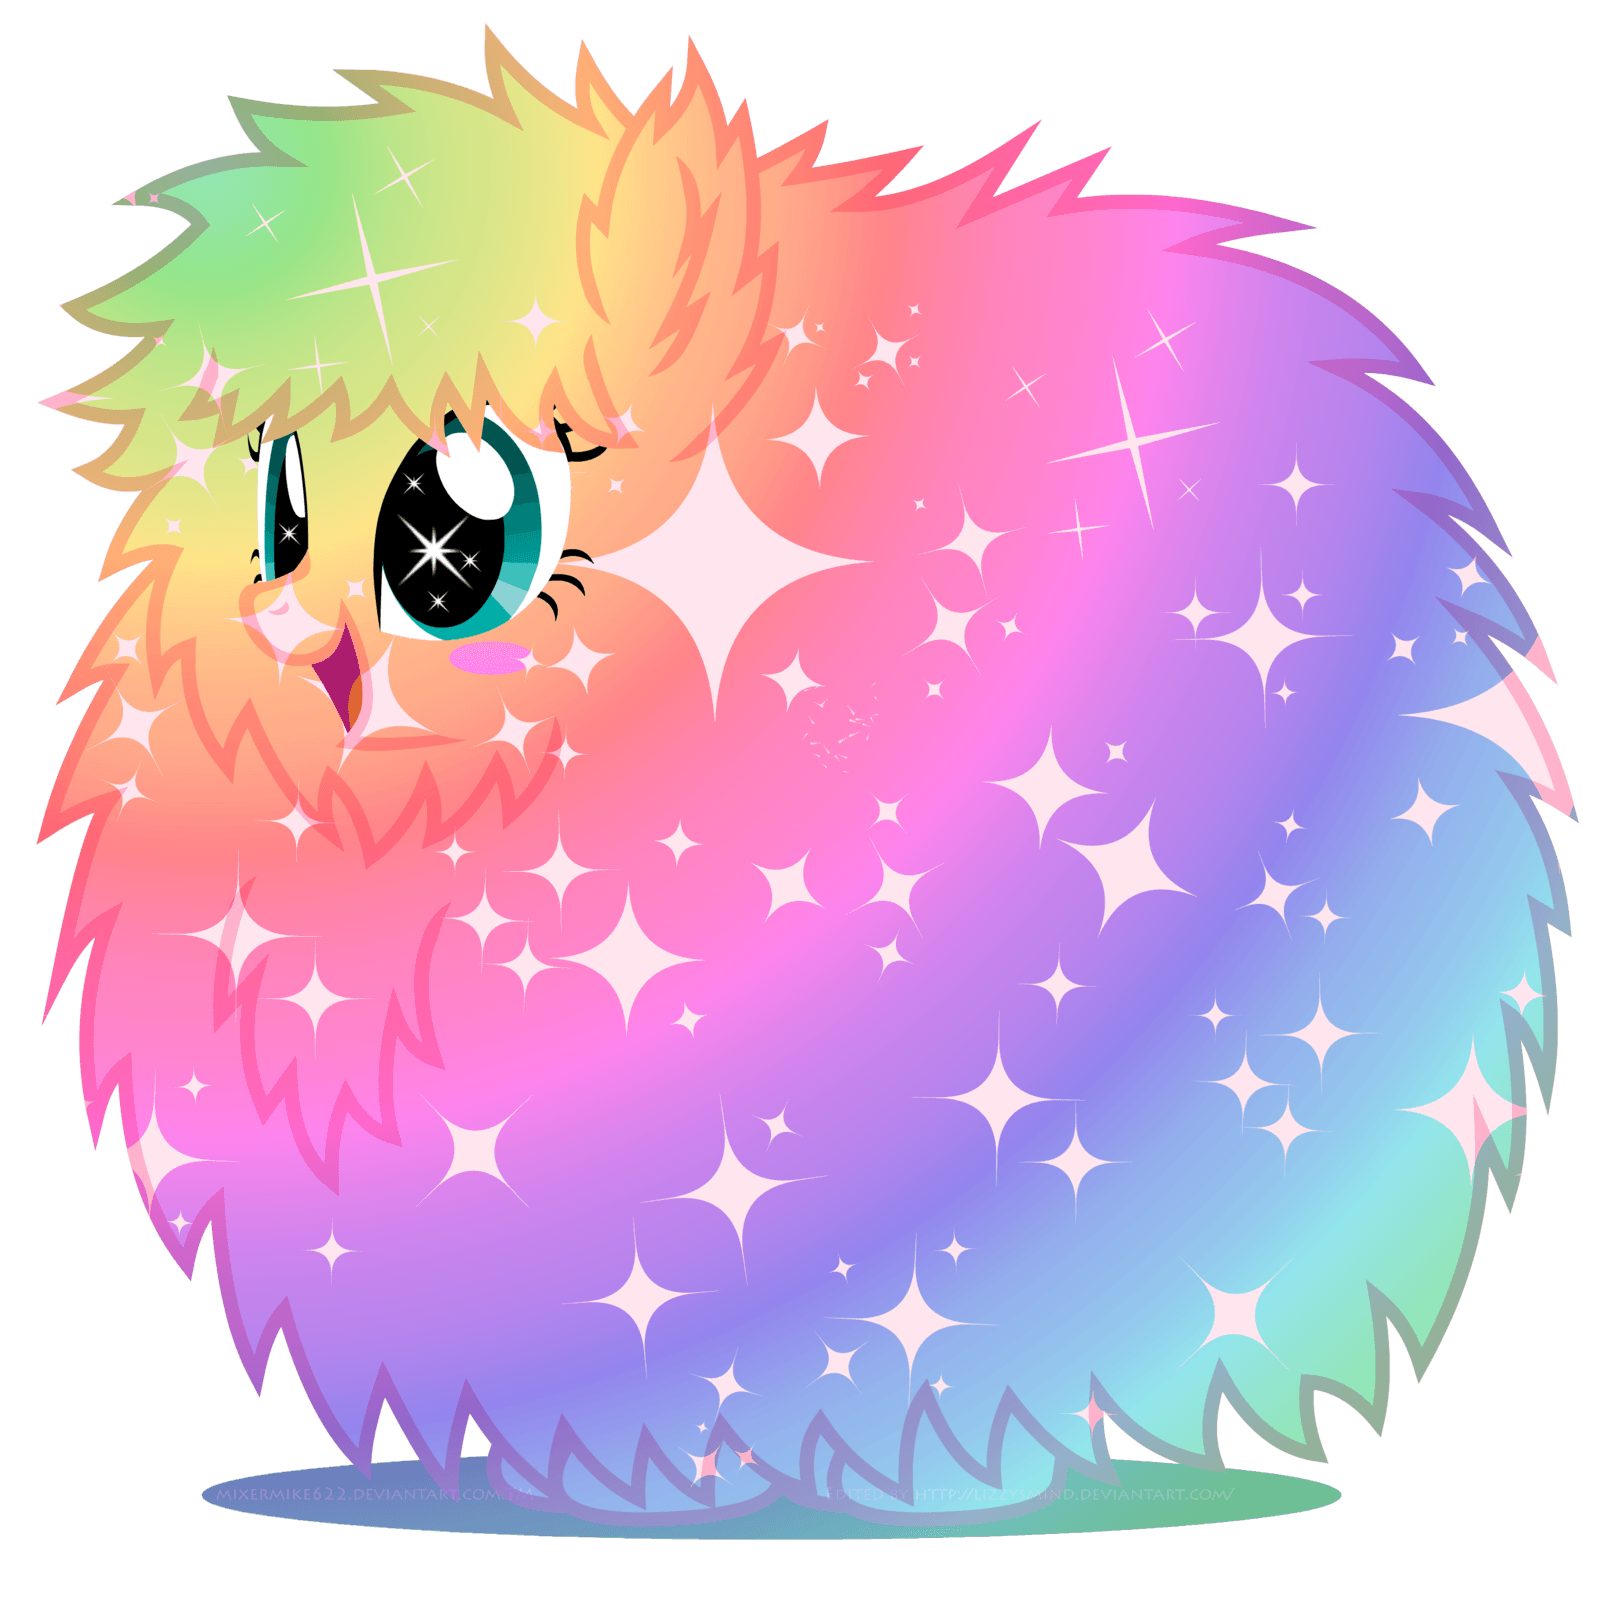 Rainbow power Fluffle Puff by LizzysMindD. creatures